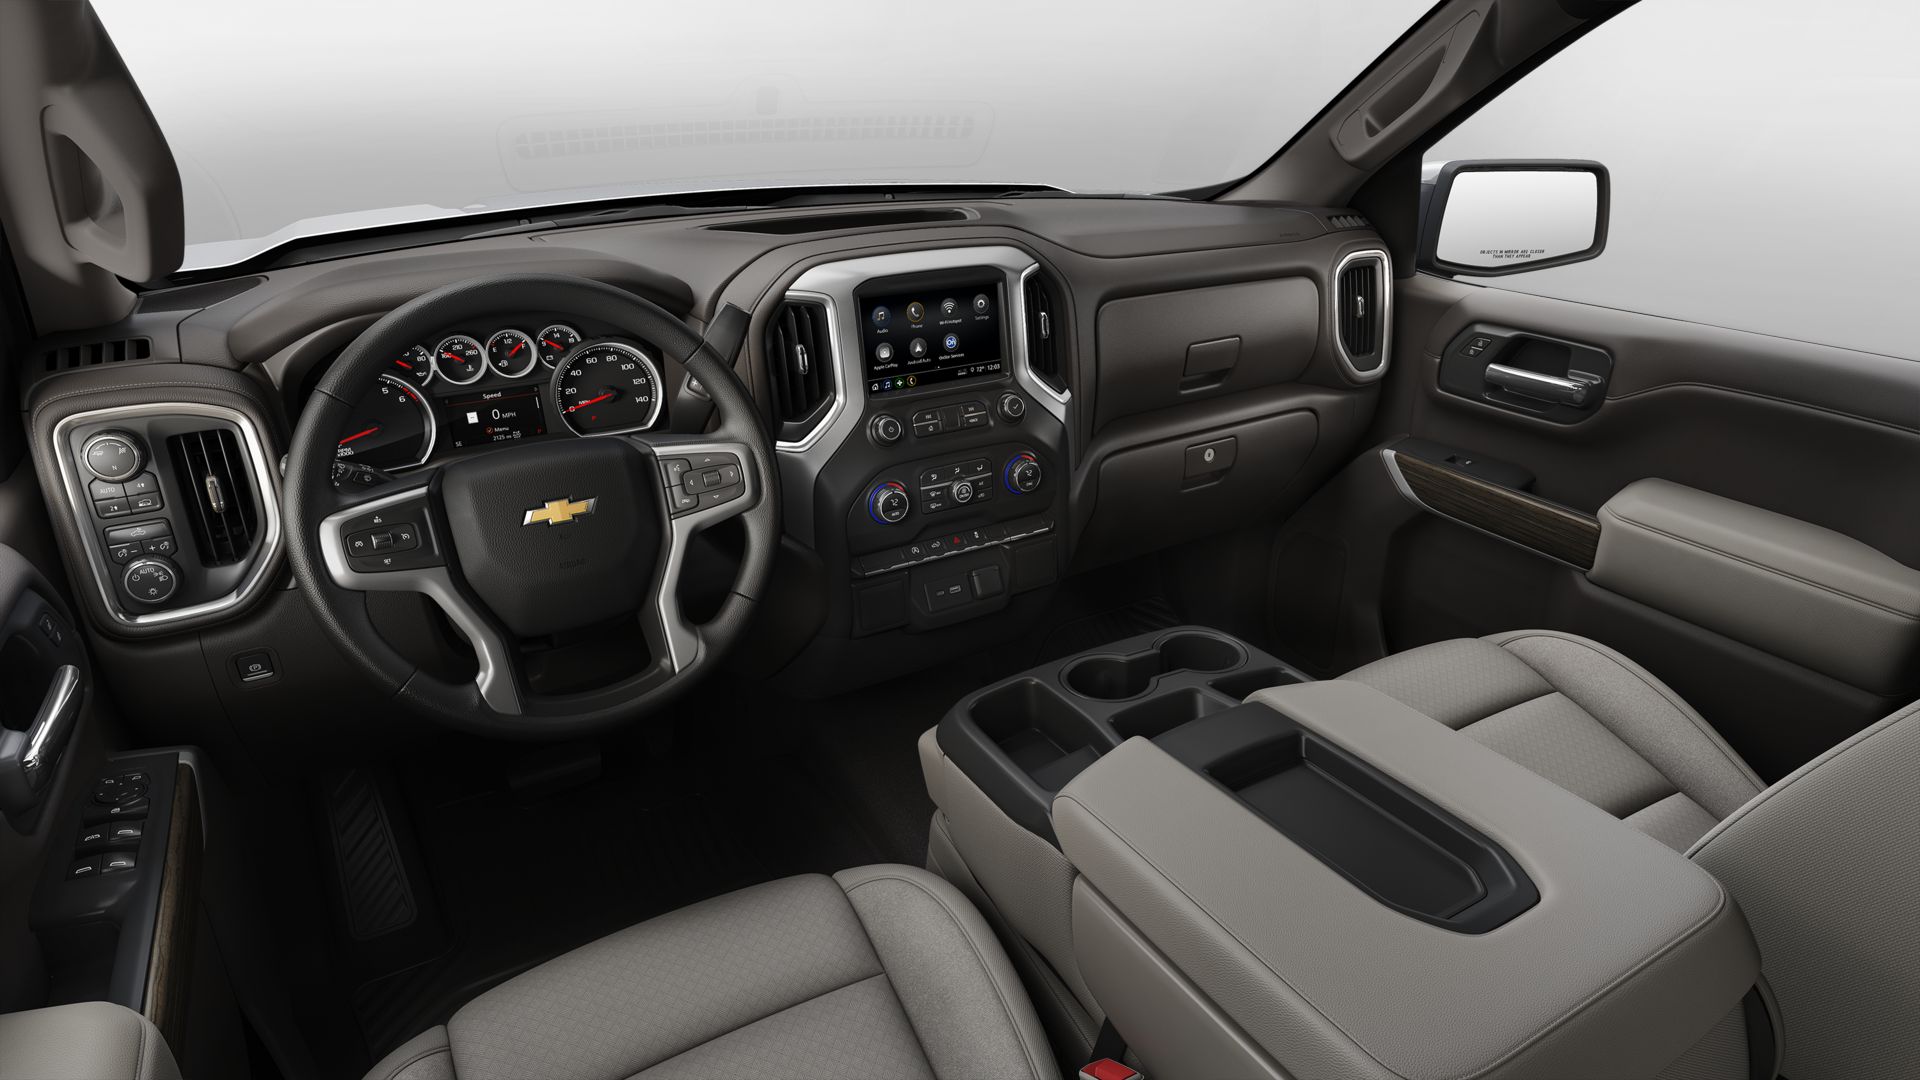 2019 Chevrolet Silverado 1500 Interior Colors | GM Authority